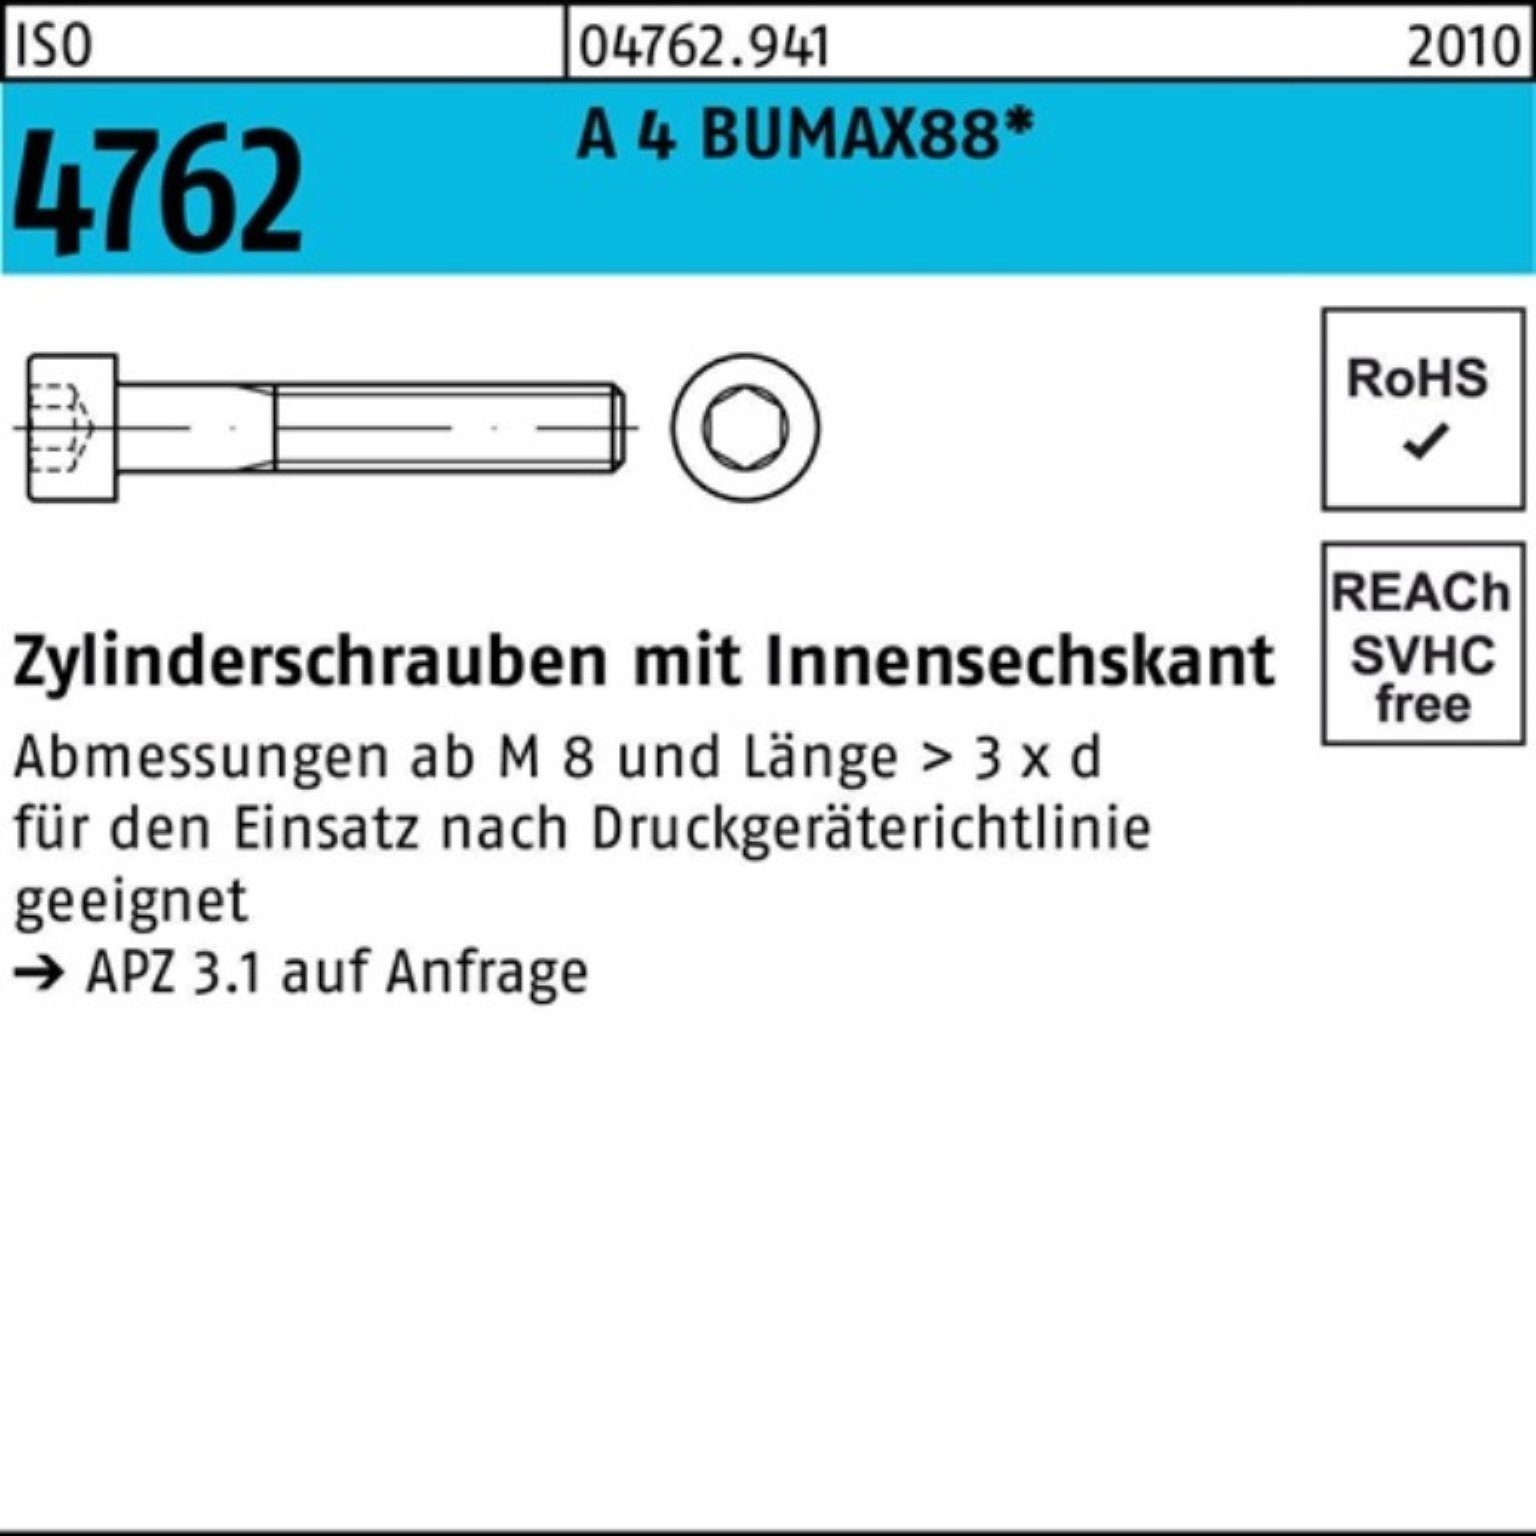 Bufab Zylinderschraube 200er Pack Zylinderschraube ISO 4762 Innen-6kt M4x 16 A 4 BUMAX88 200